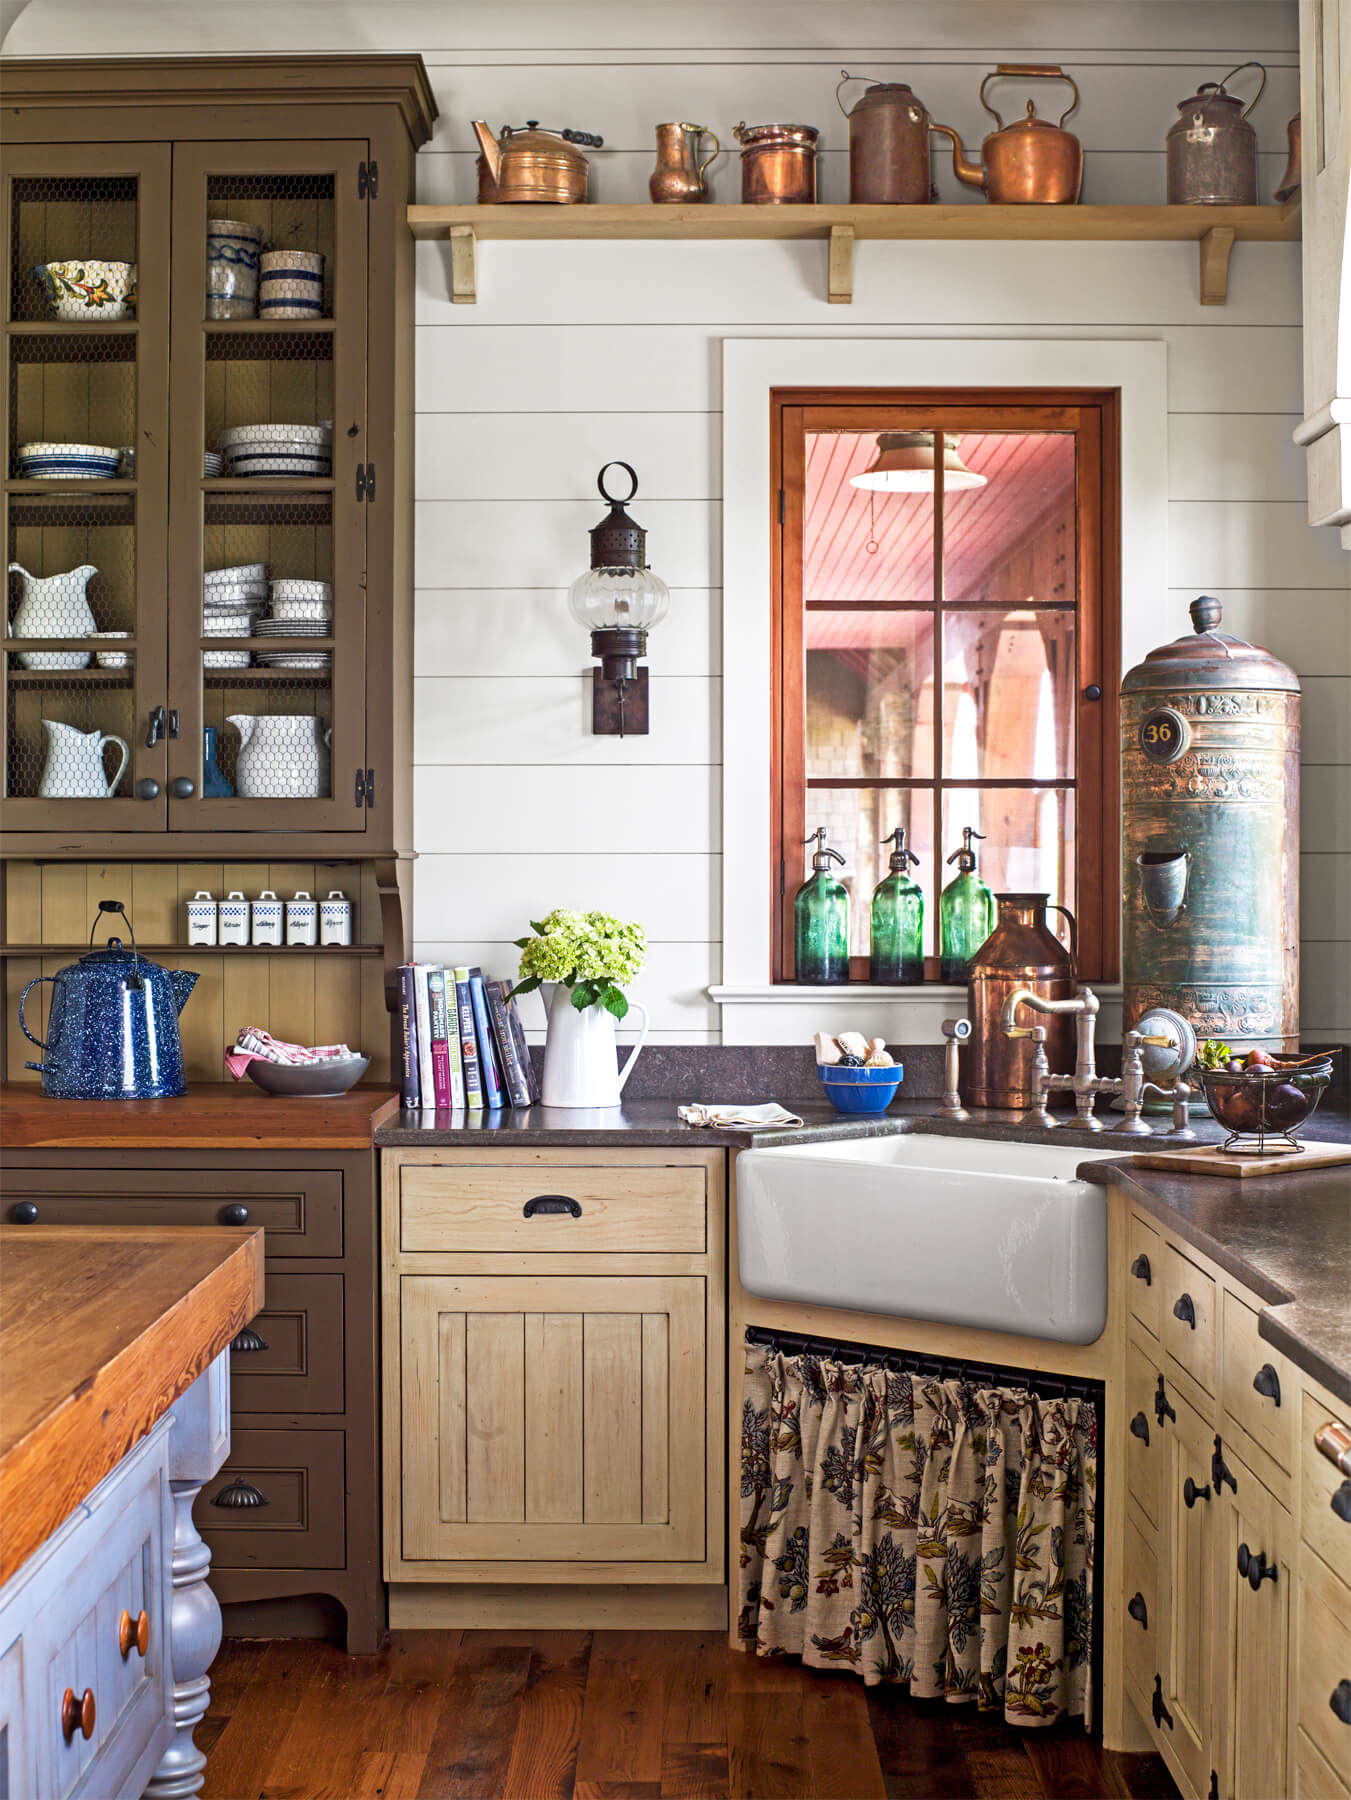 20 Best Vintage Kitchen Decor Ideas and Designs for 20